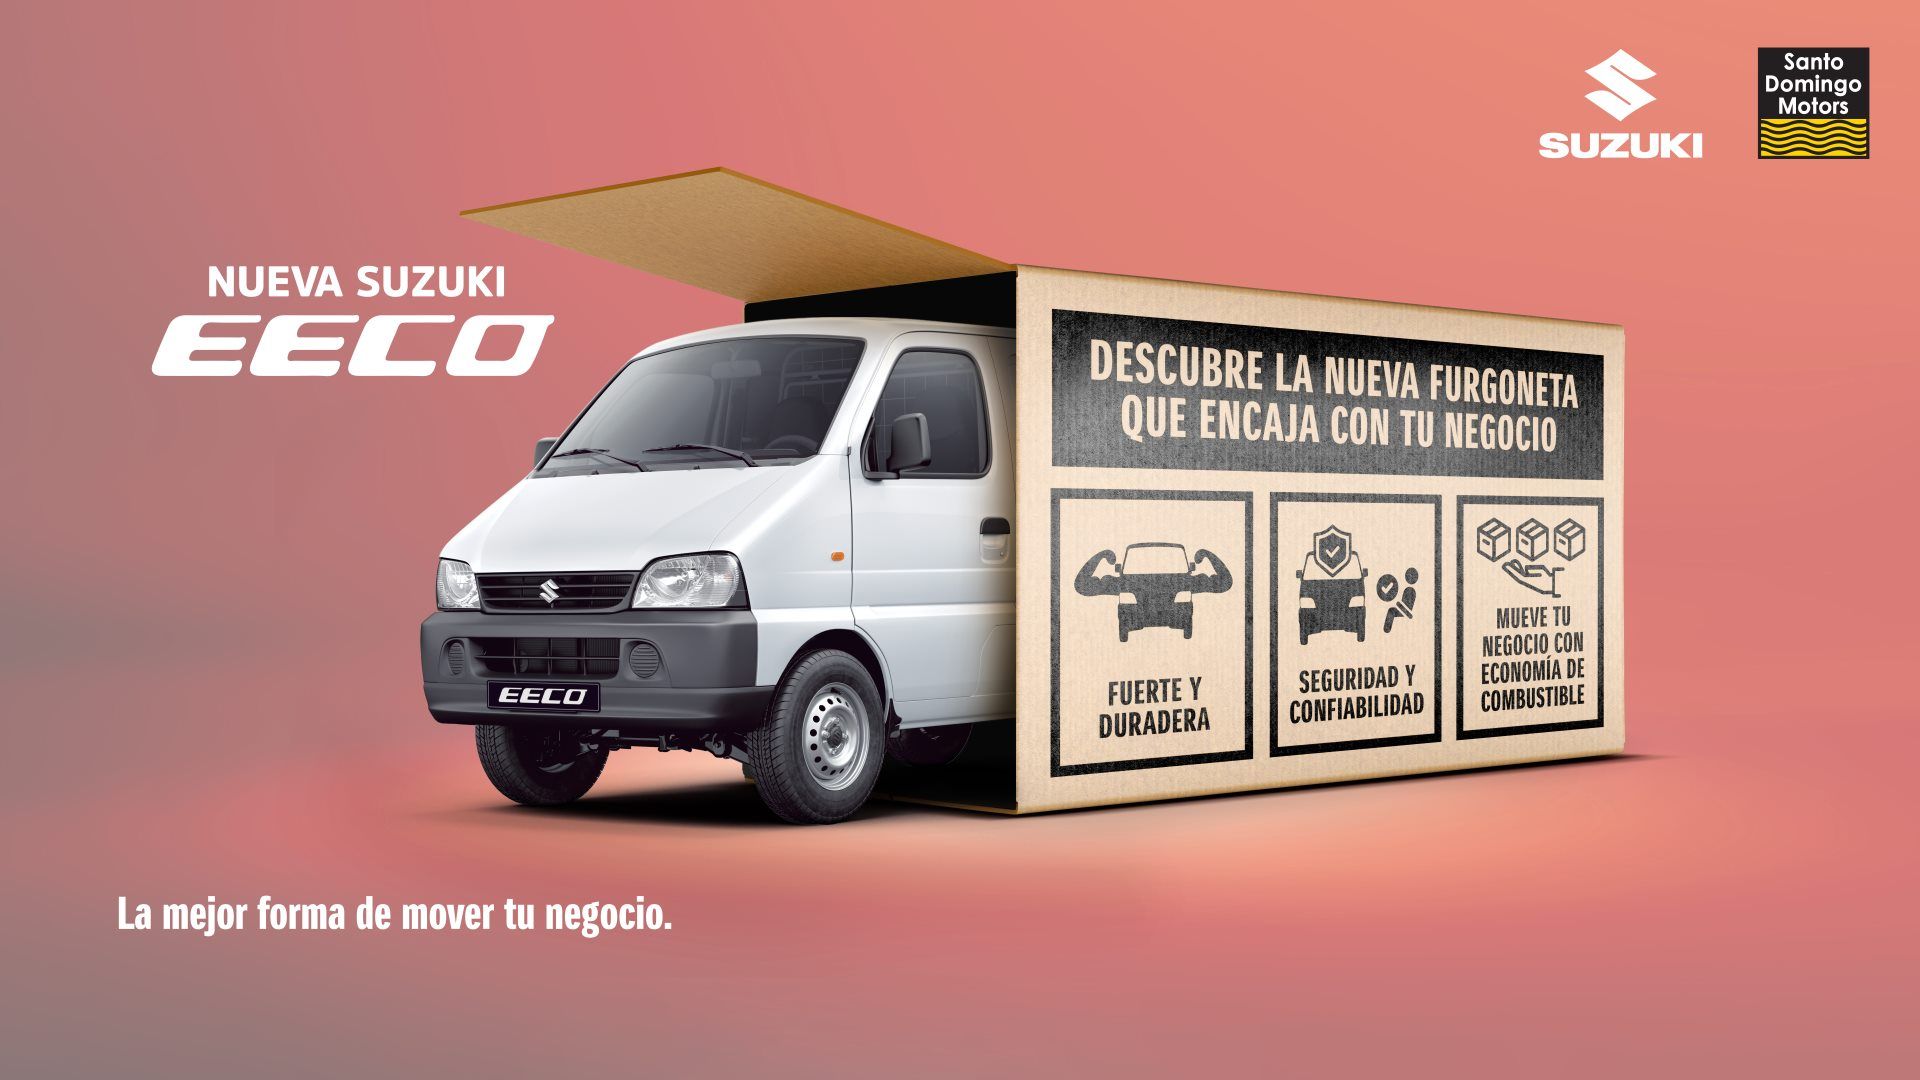 Nueva Suzuki Eeco